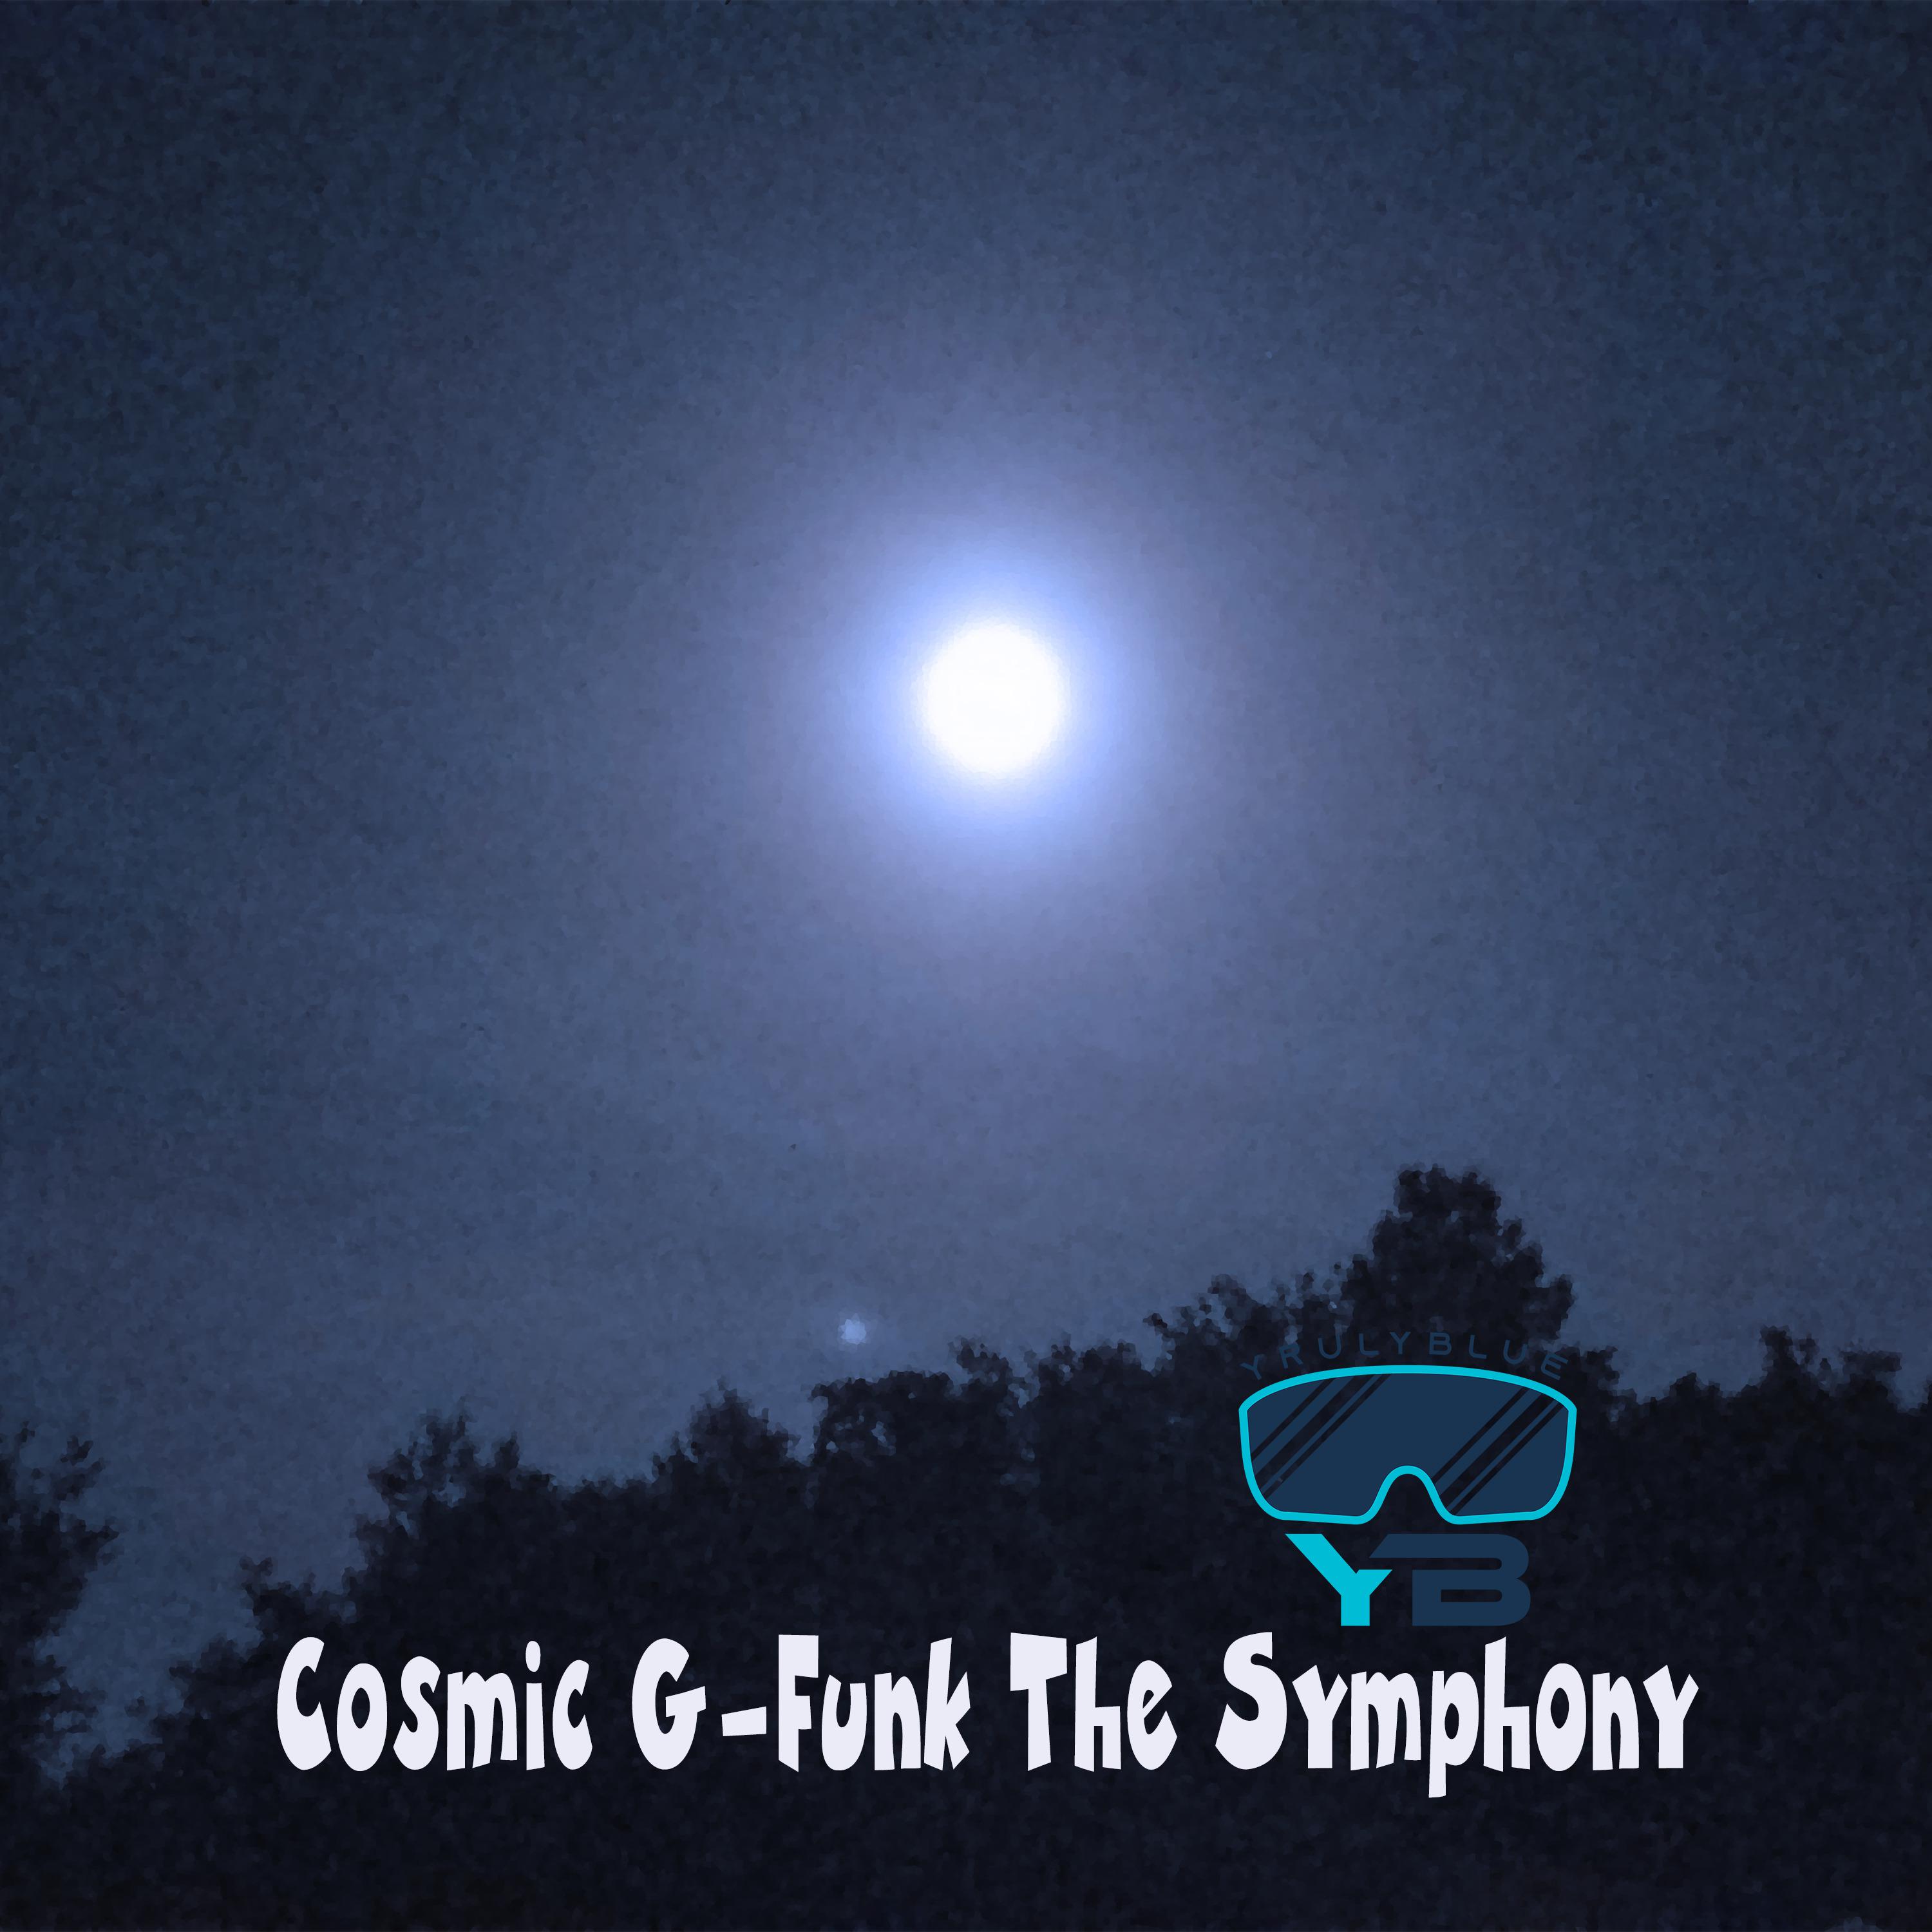 Cosmic G-funk The Symphony